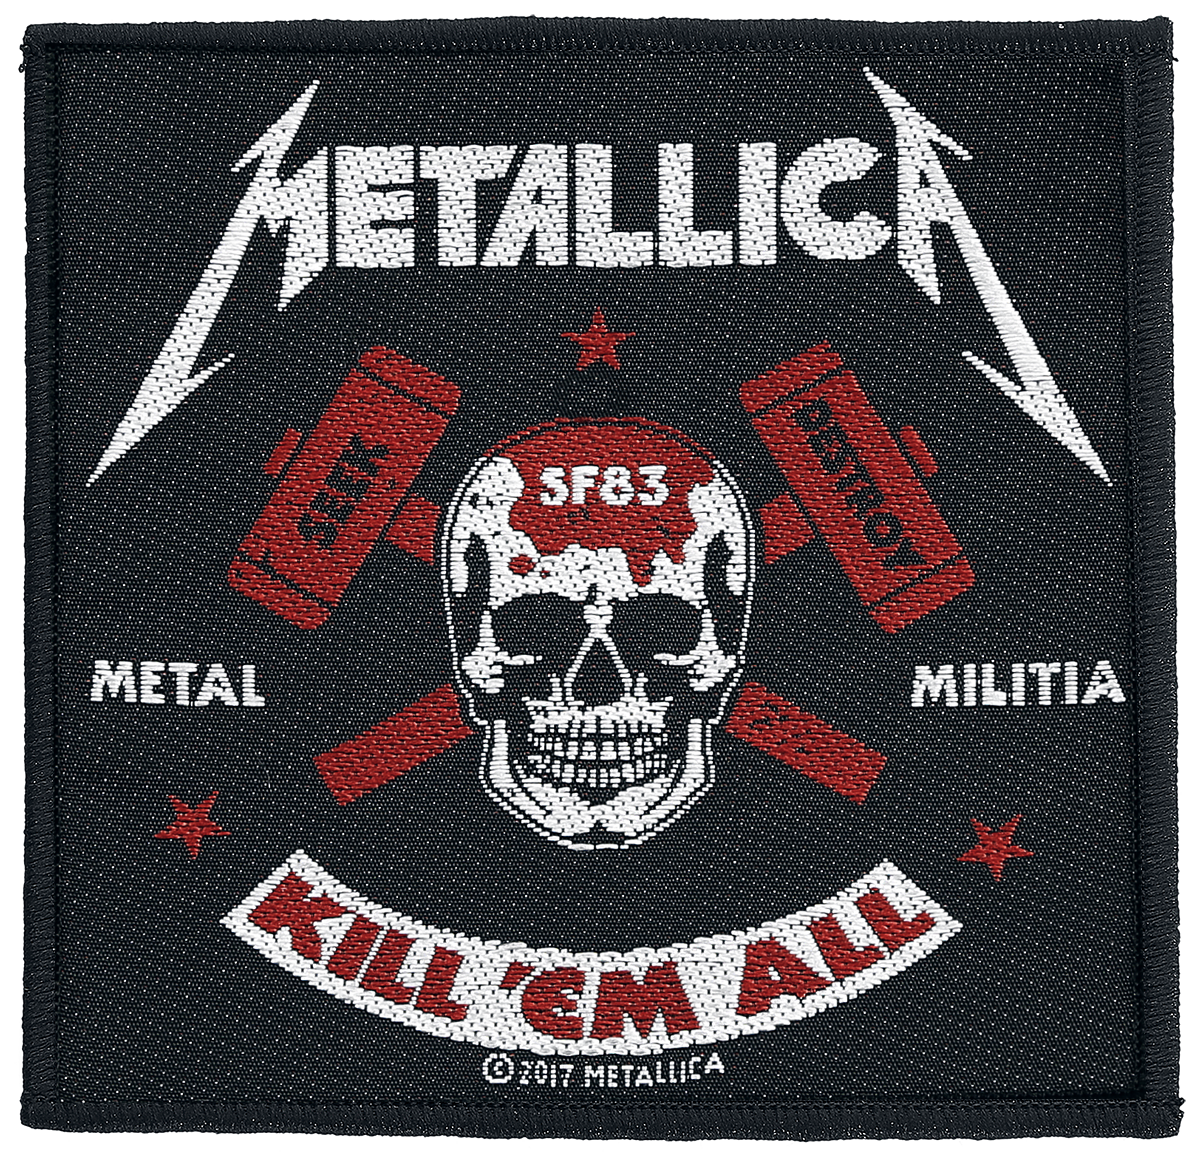 Metallica - Metal Militia - Patch - schwarz| rot| weiß